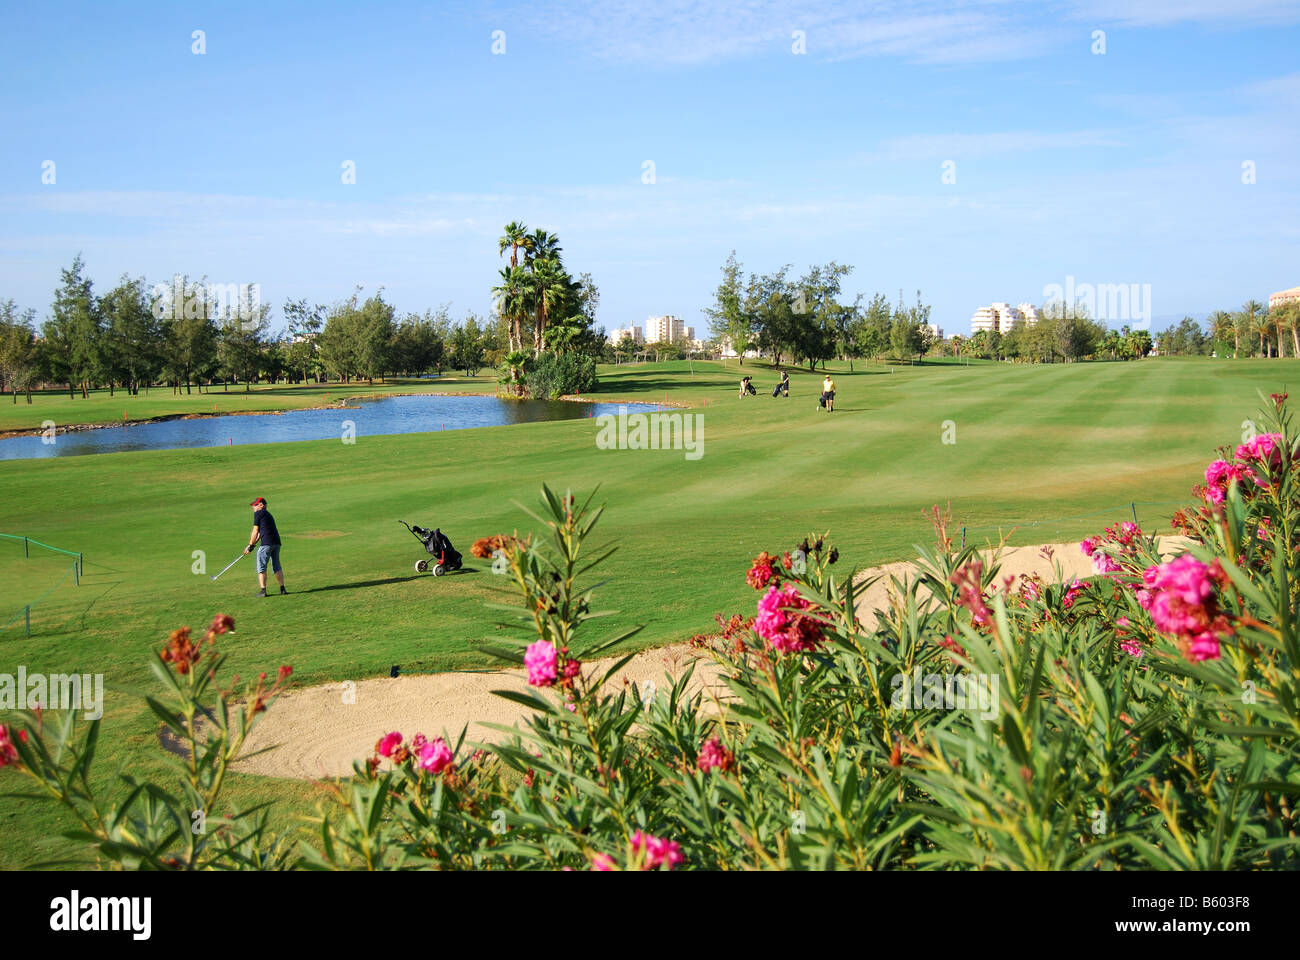 Playa de las americas golf hi-res stock photography and images - Alamy